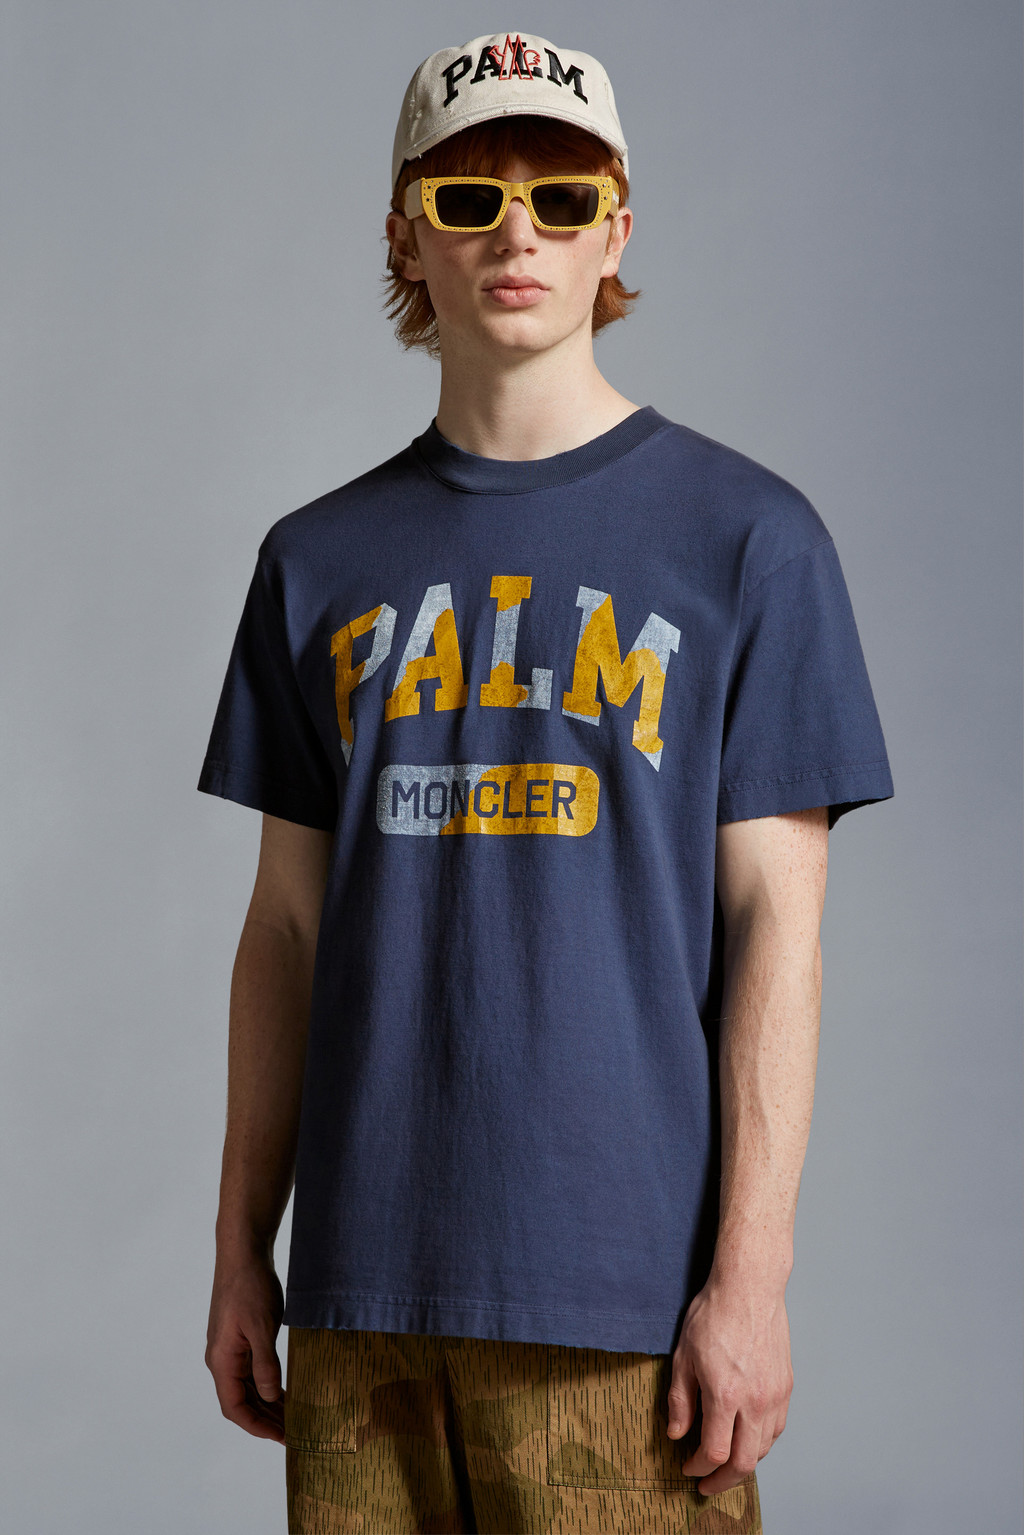 Moncler x Palm Angels - T-Shirts, Tracksuits & Jackets | Moncler